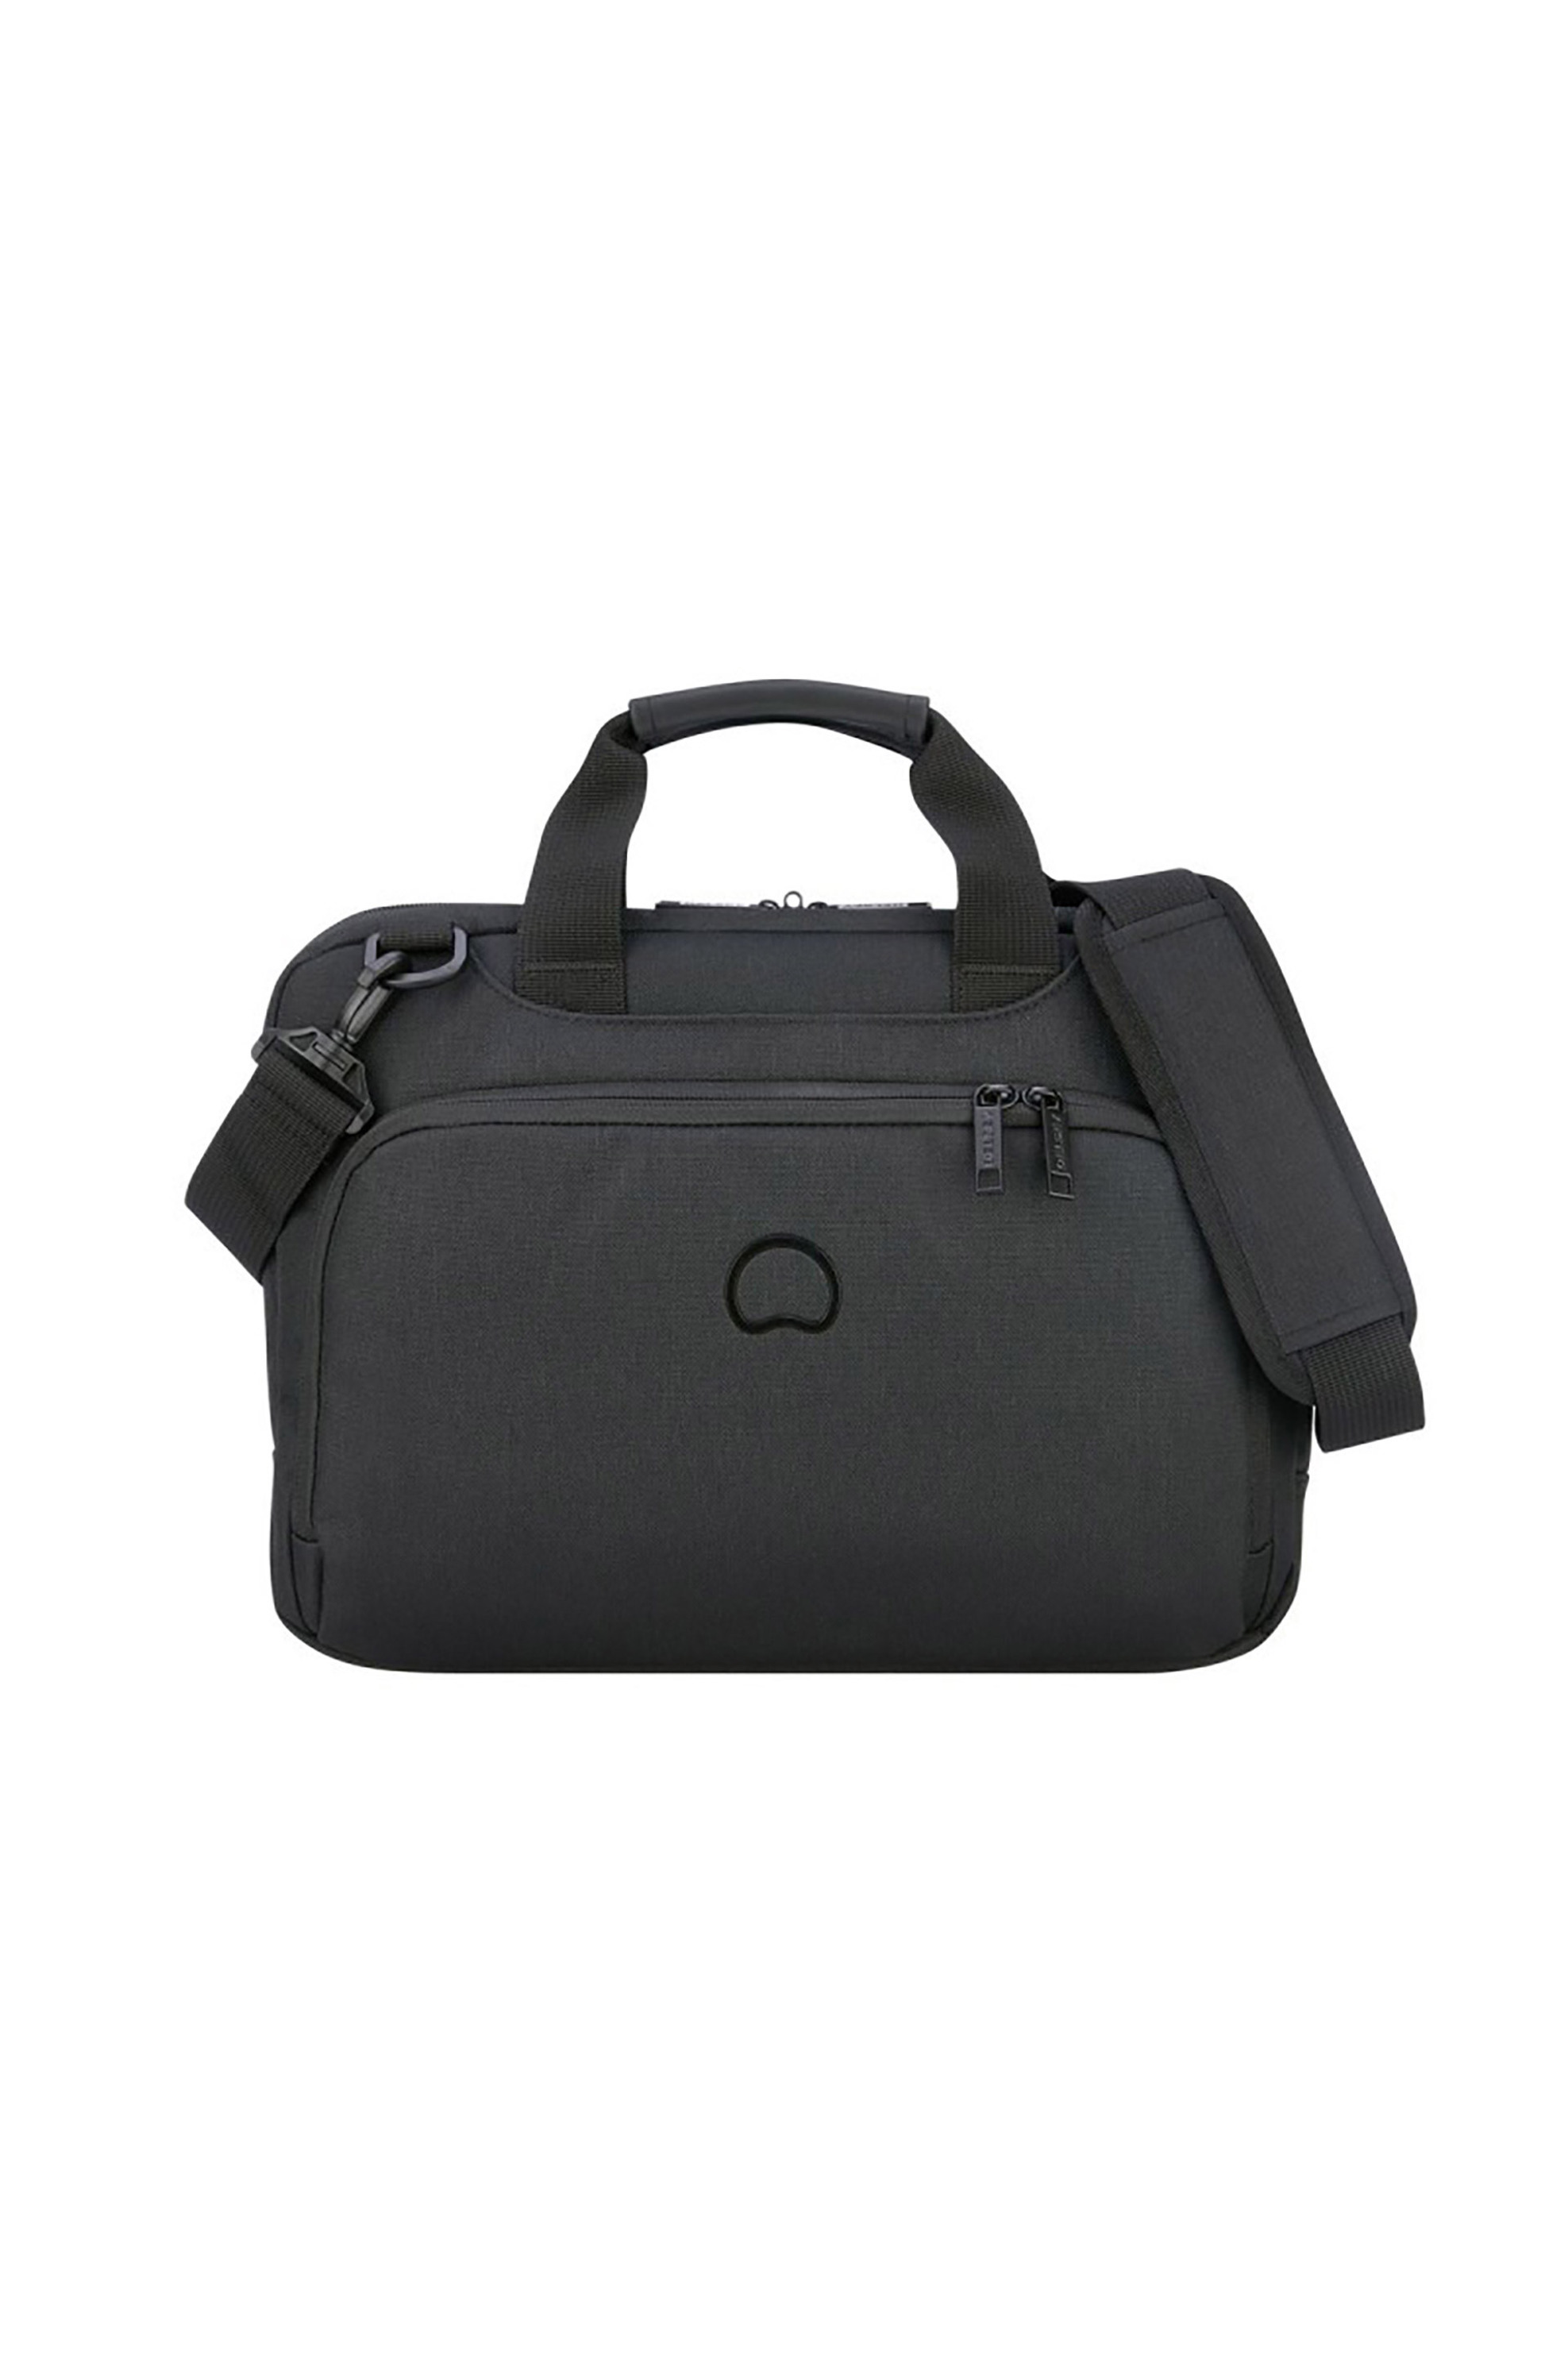 DELSEY Delsey unisex τσάντα χειρός μονόχρωμη με αποσπώμενο ιμάντα ώμου "Esplanade" 26 x 35,5 x 6 cm - 394216250